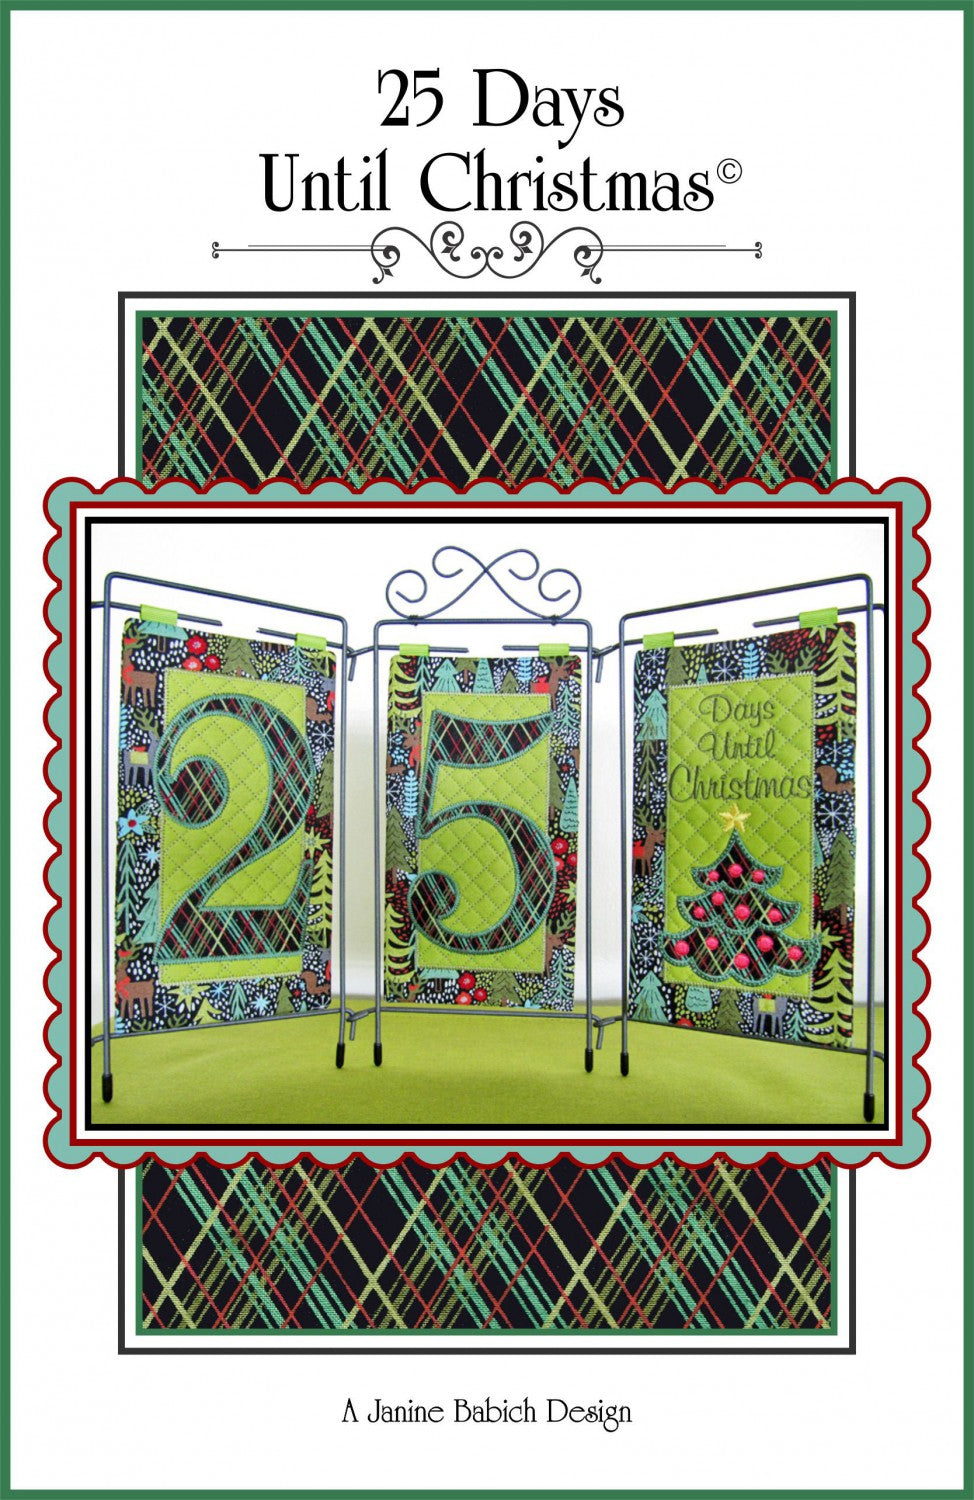 25 Days Until Christmas, From Janine Babich Designs, by Janine Babich